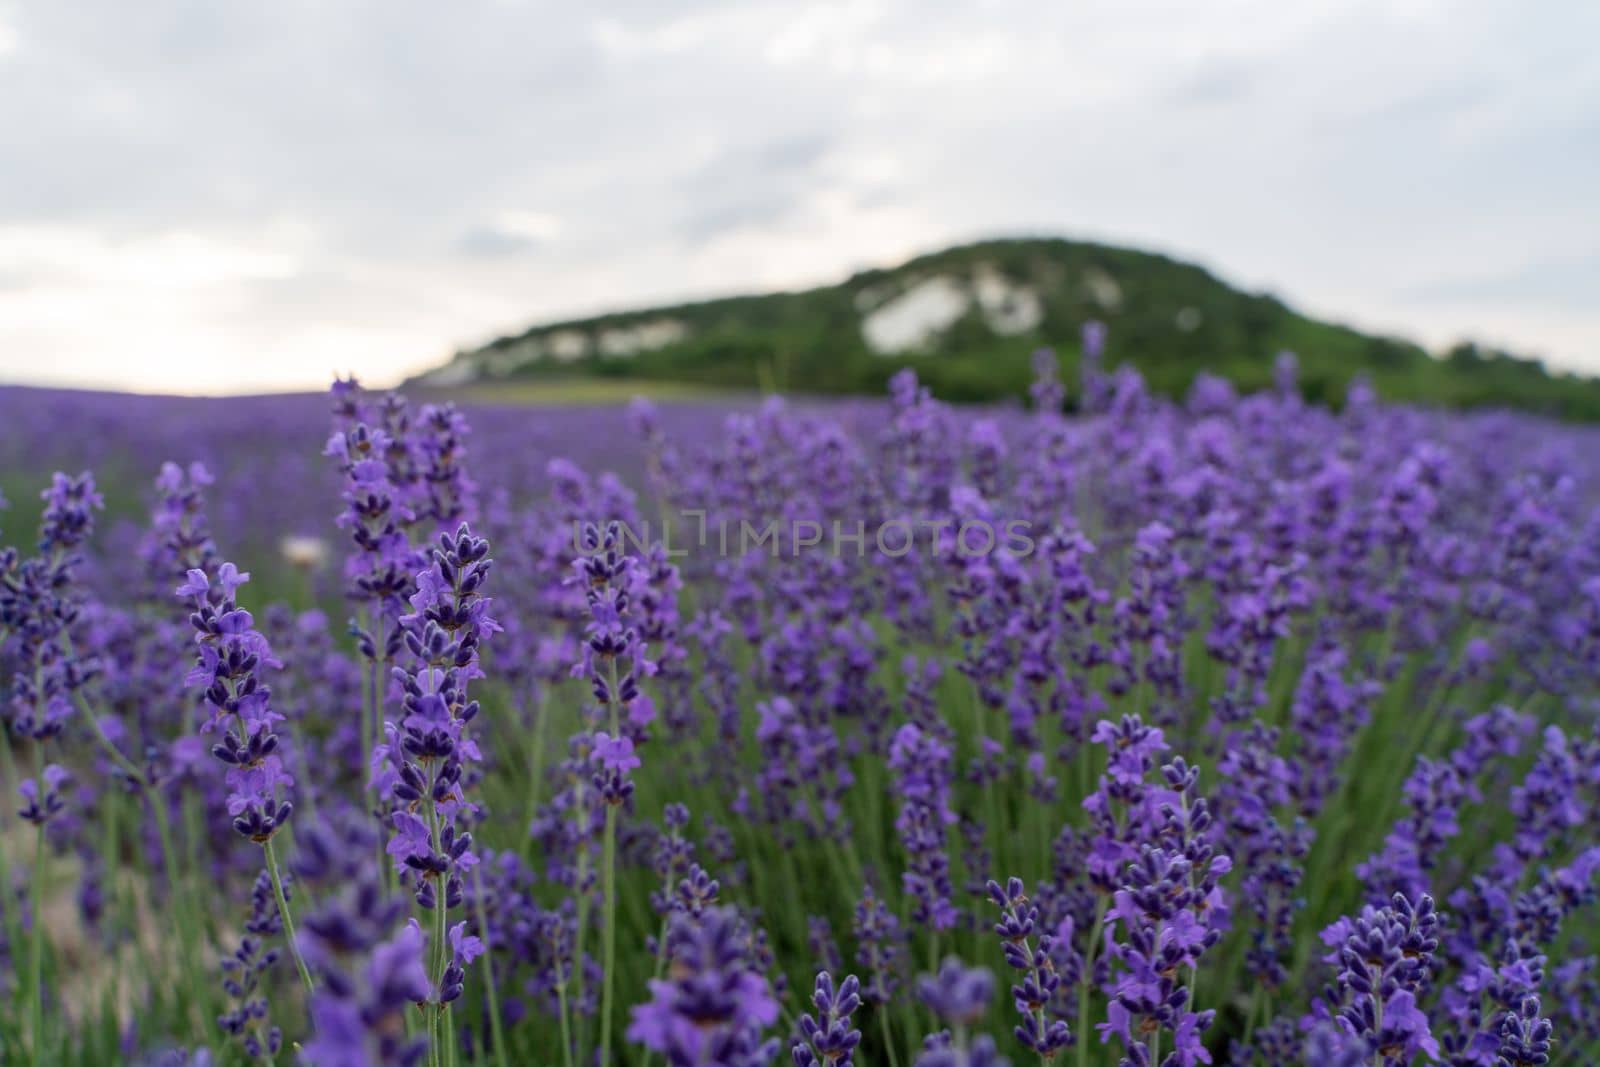 Lavender flower field, Blooming purple fragrant lavender flowers. Growing lavender swaying in the wind, harvesting, perfume ingredient, aromatherapy by Matiunina